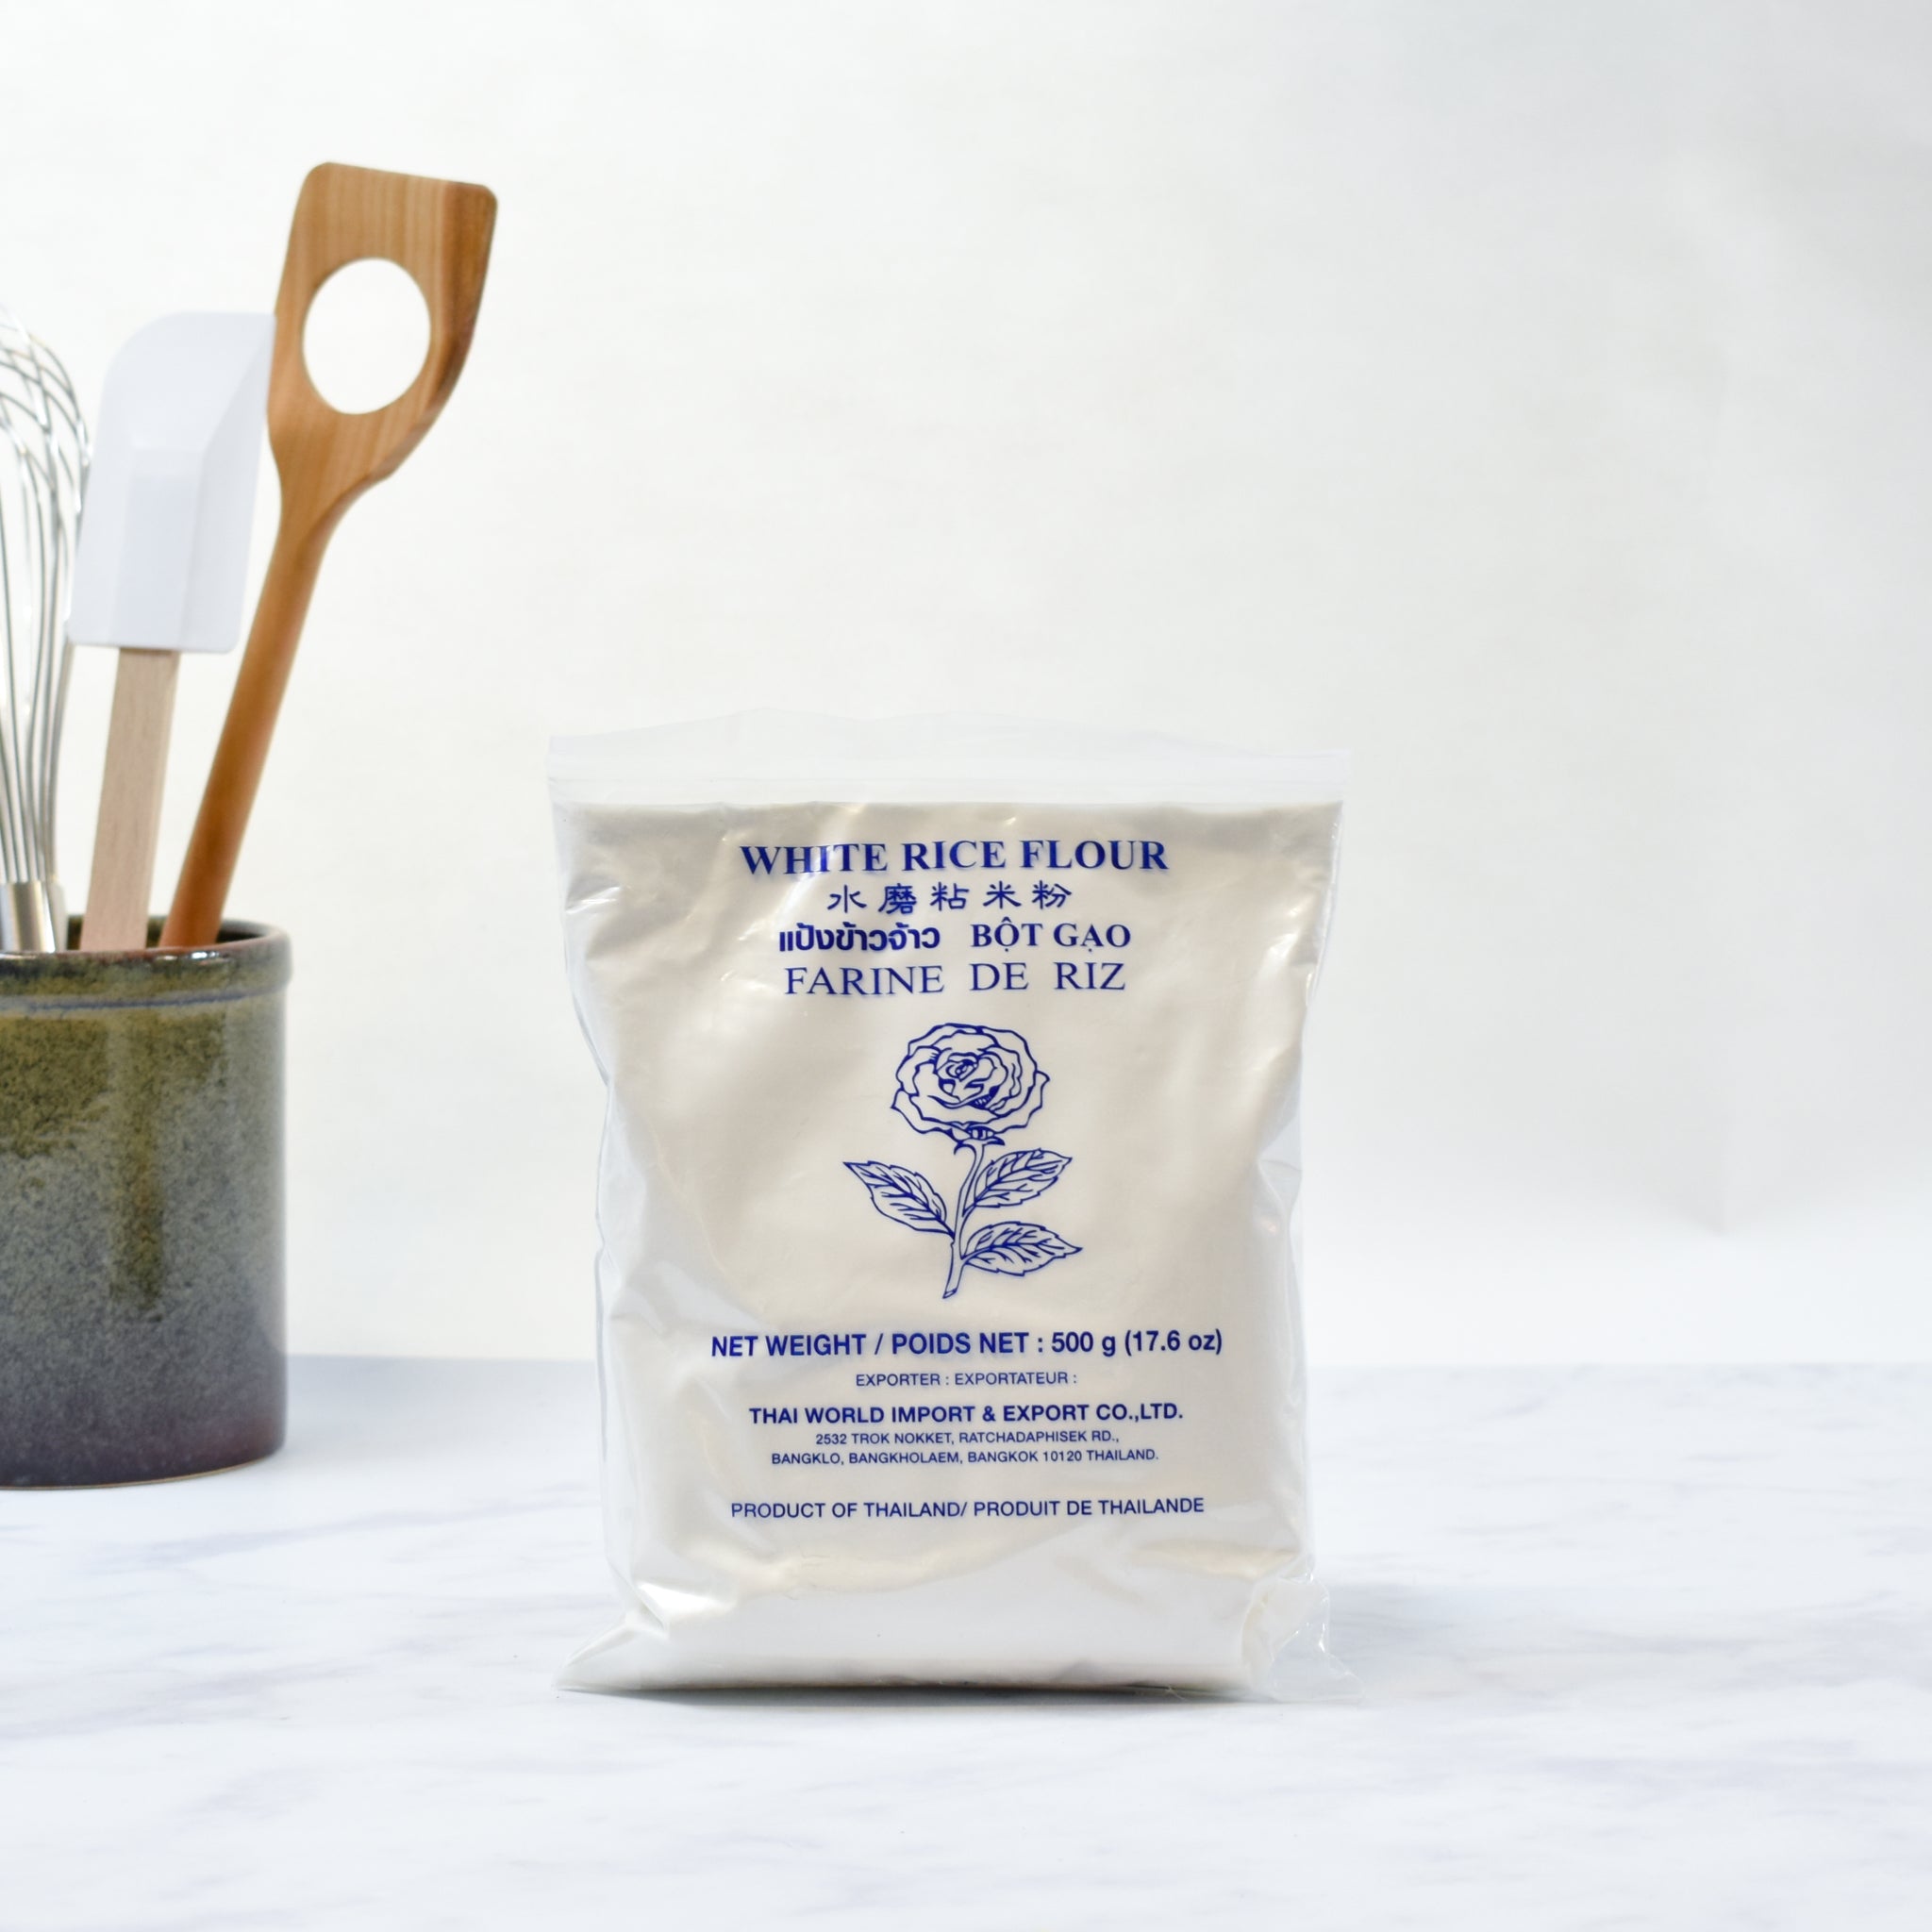 FLCK Rice Flour 450g Ingredients Flour Grains & Seeds Southeast Asian Food Lifestyle Packaging Shot